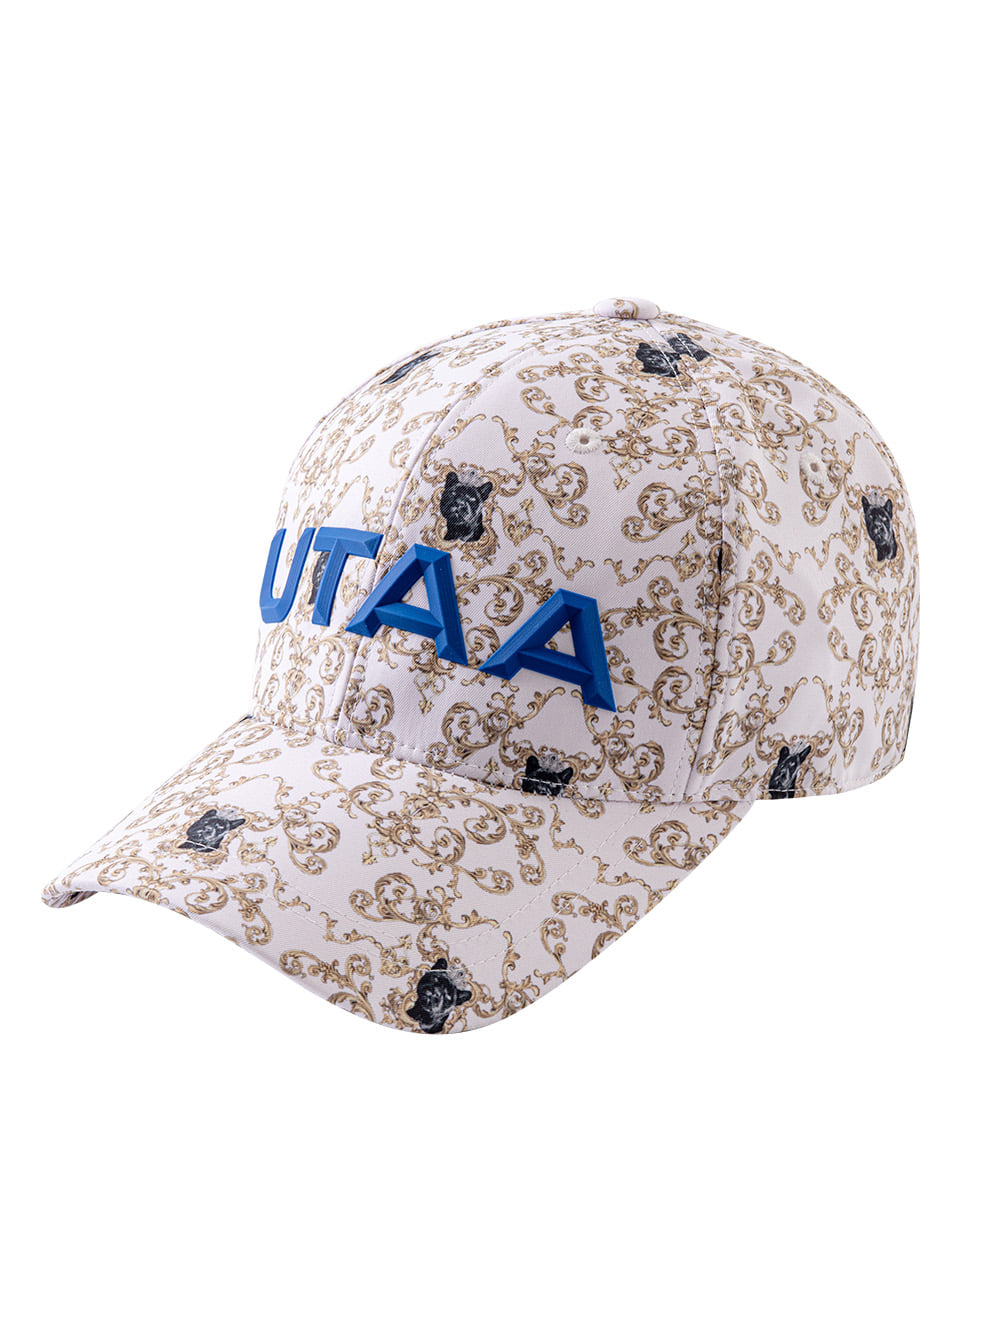 UTAA Crown Figure Cap : Pink  (UA0GCU109LP)